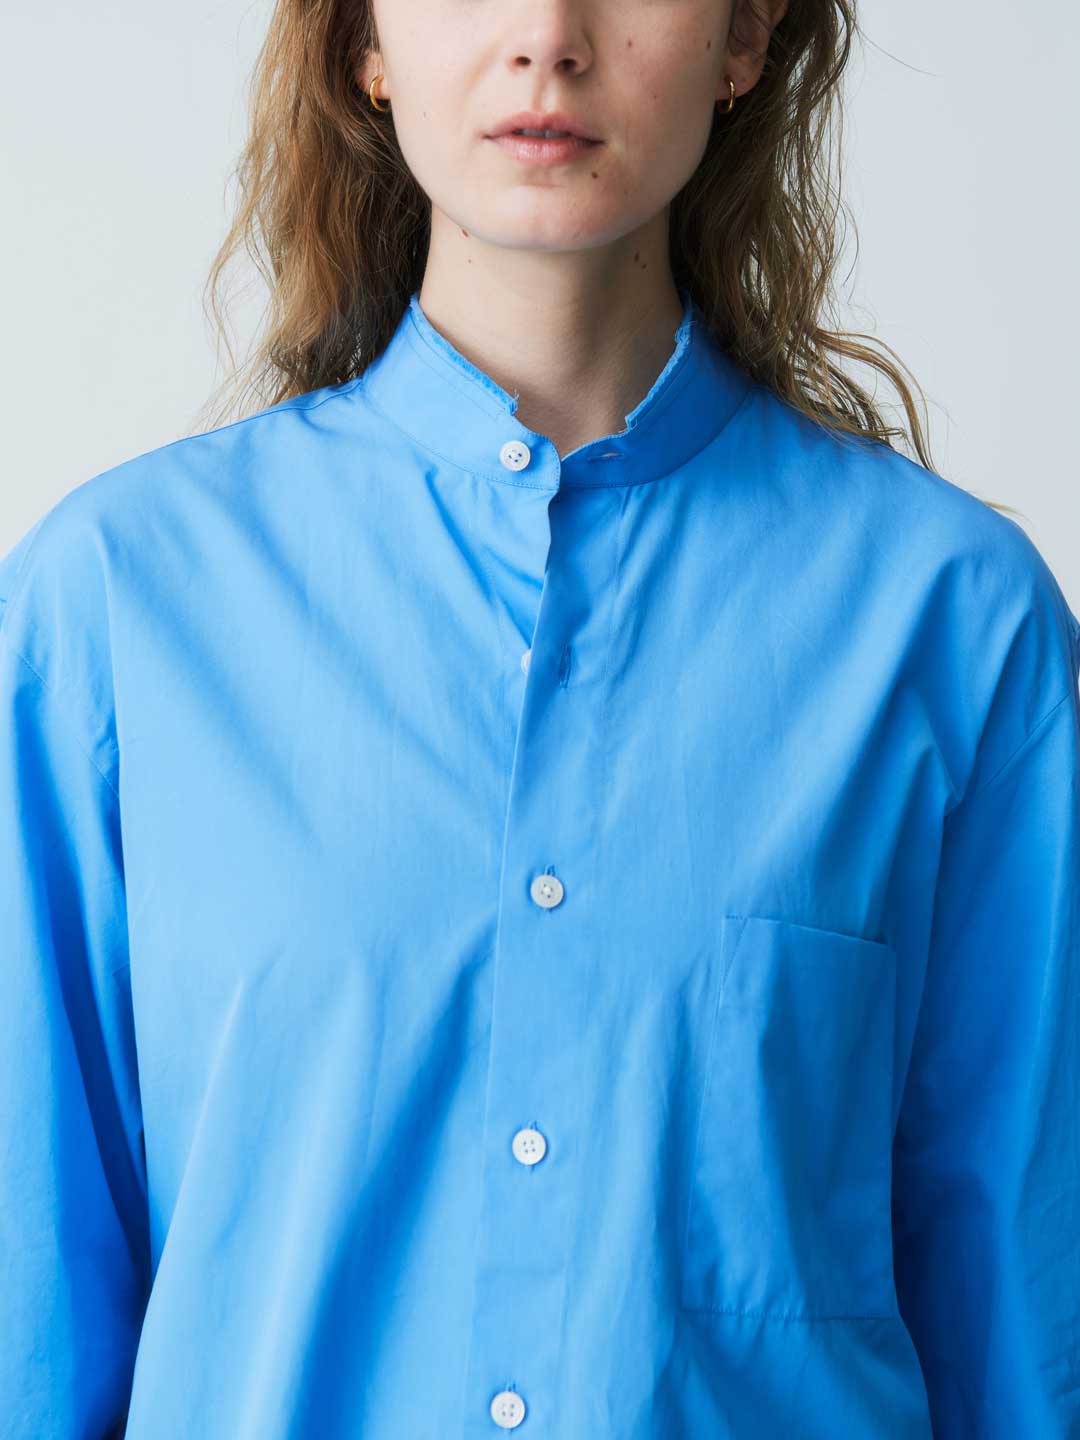 Handmade Mao Shirt With Fringed Collar - Blue